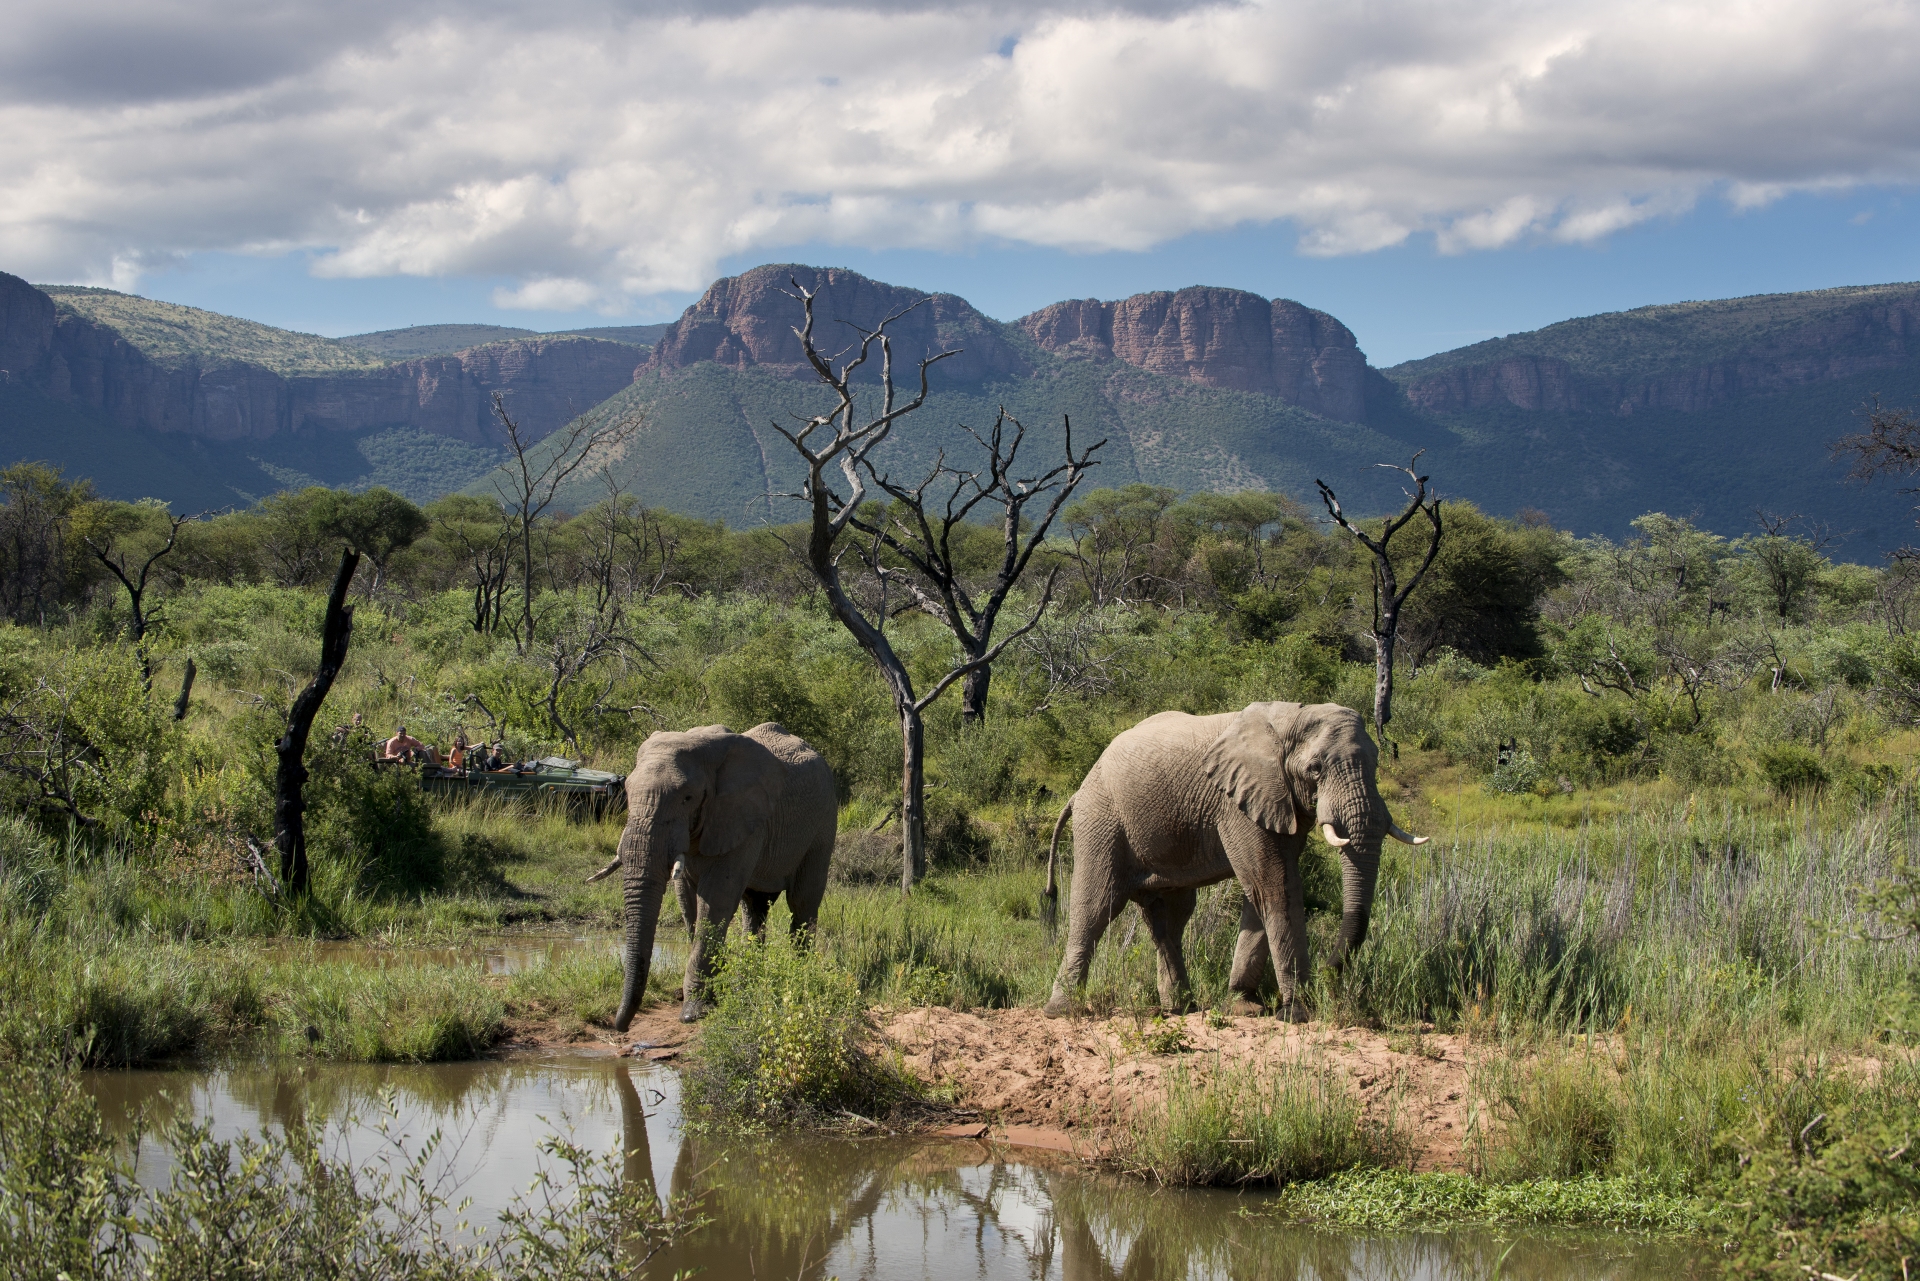 Elephants on safari 